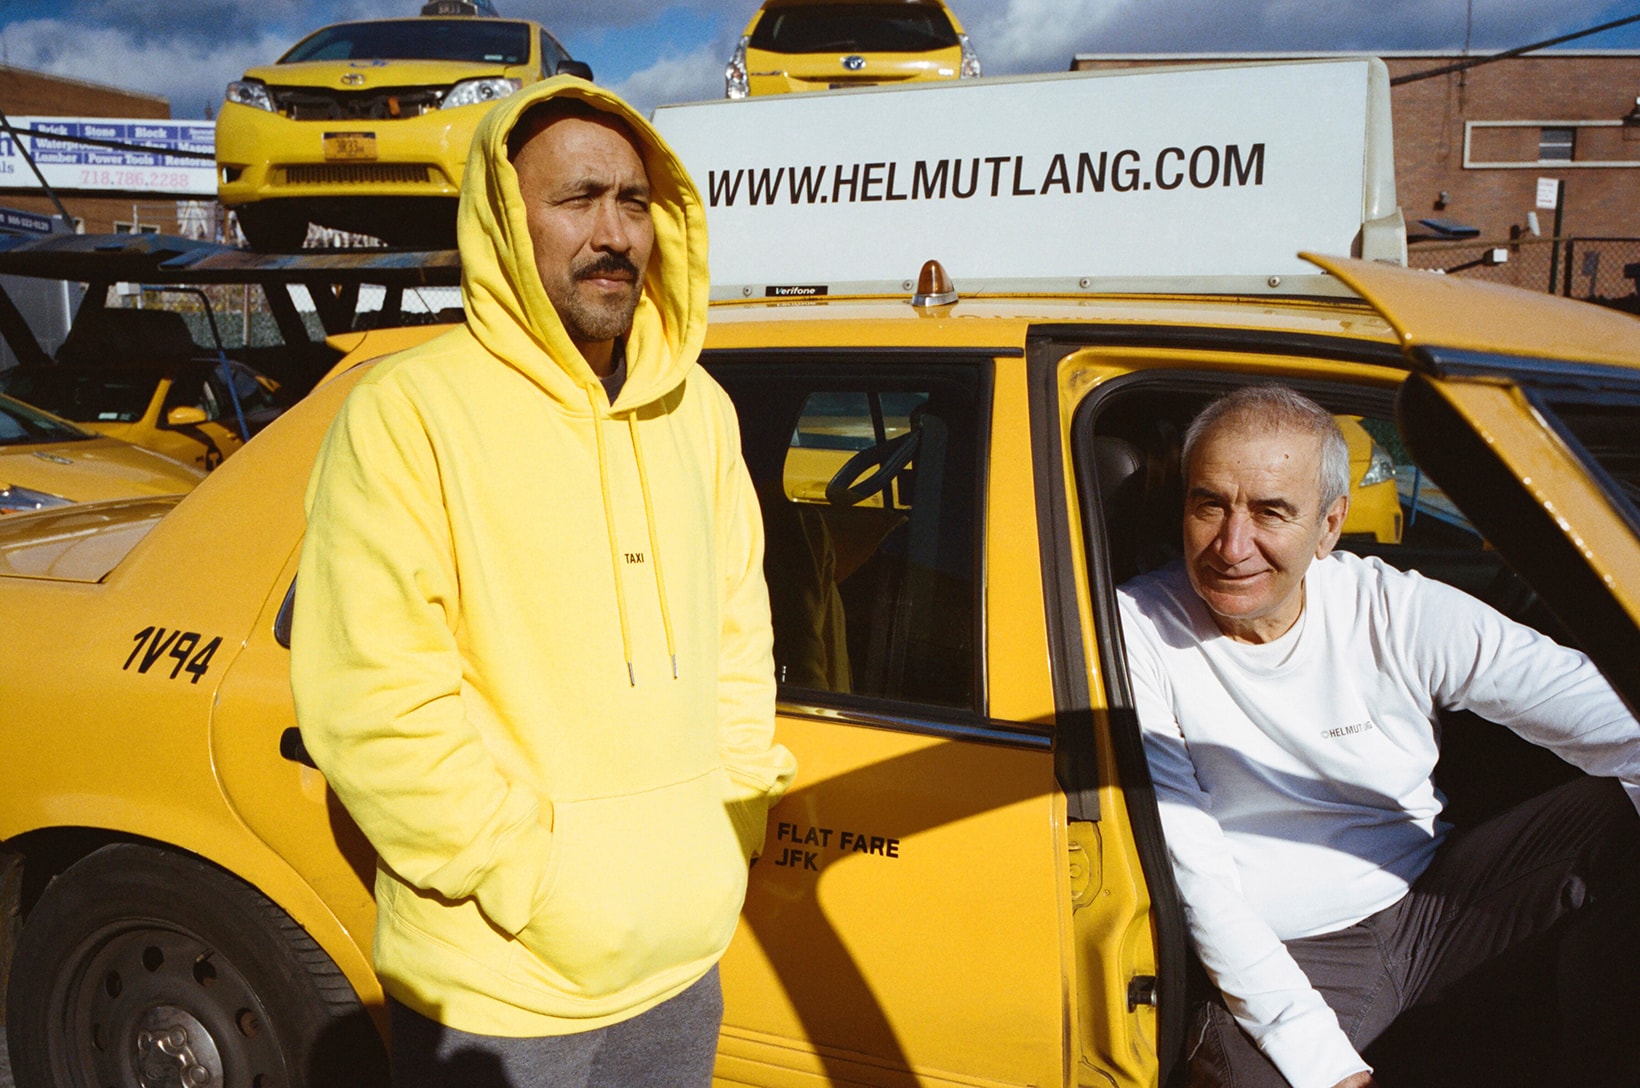 Helmut Lang Global Taxi Initiative campaign advertisement drivers limited edition 1998 yellow cab photographers hoodie tee shirt long short sleeve HONG KONG ALEXANDRA LEESE @ALEXLEESE  LONDON TOM EMMERSON @TOM.EMMERSON  NEW YORK ALEX LEE @ALEXLEENYC  PARIS PATRICK WELDE @PATRICKWELDE  TOKYO KENTA NAKAMURA @HANAHANAMEGANE17 reference homage may 30 2018 pre order